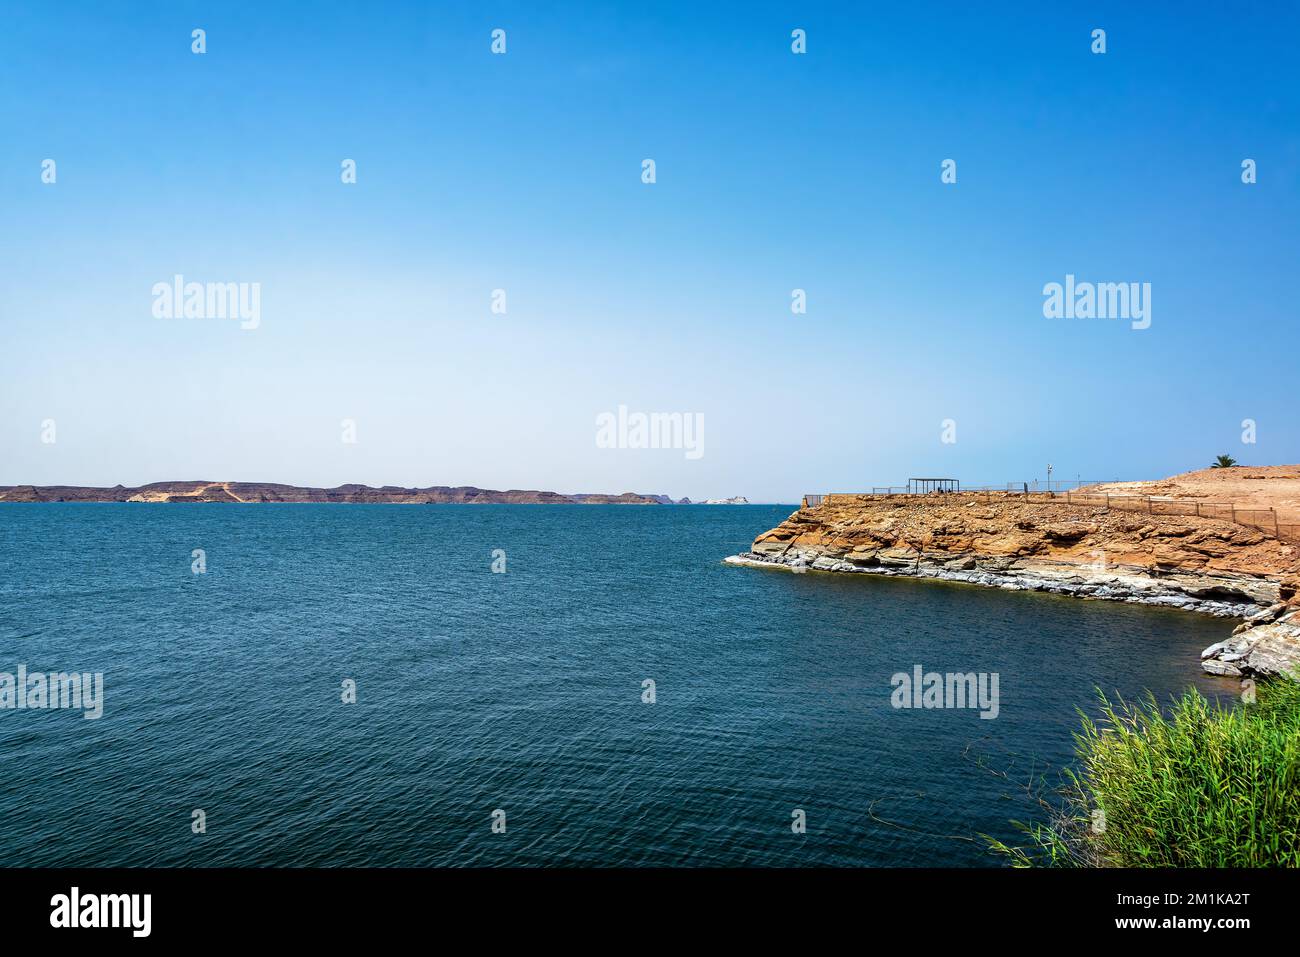 View of Lake Nasser at Abu Simbel, Egypt Stock Photo